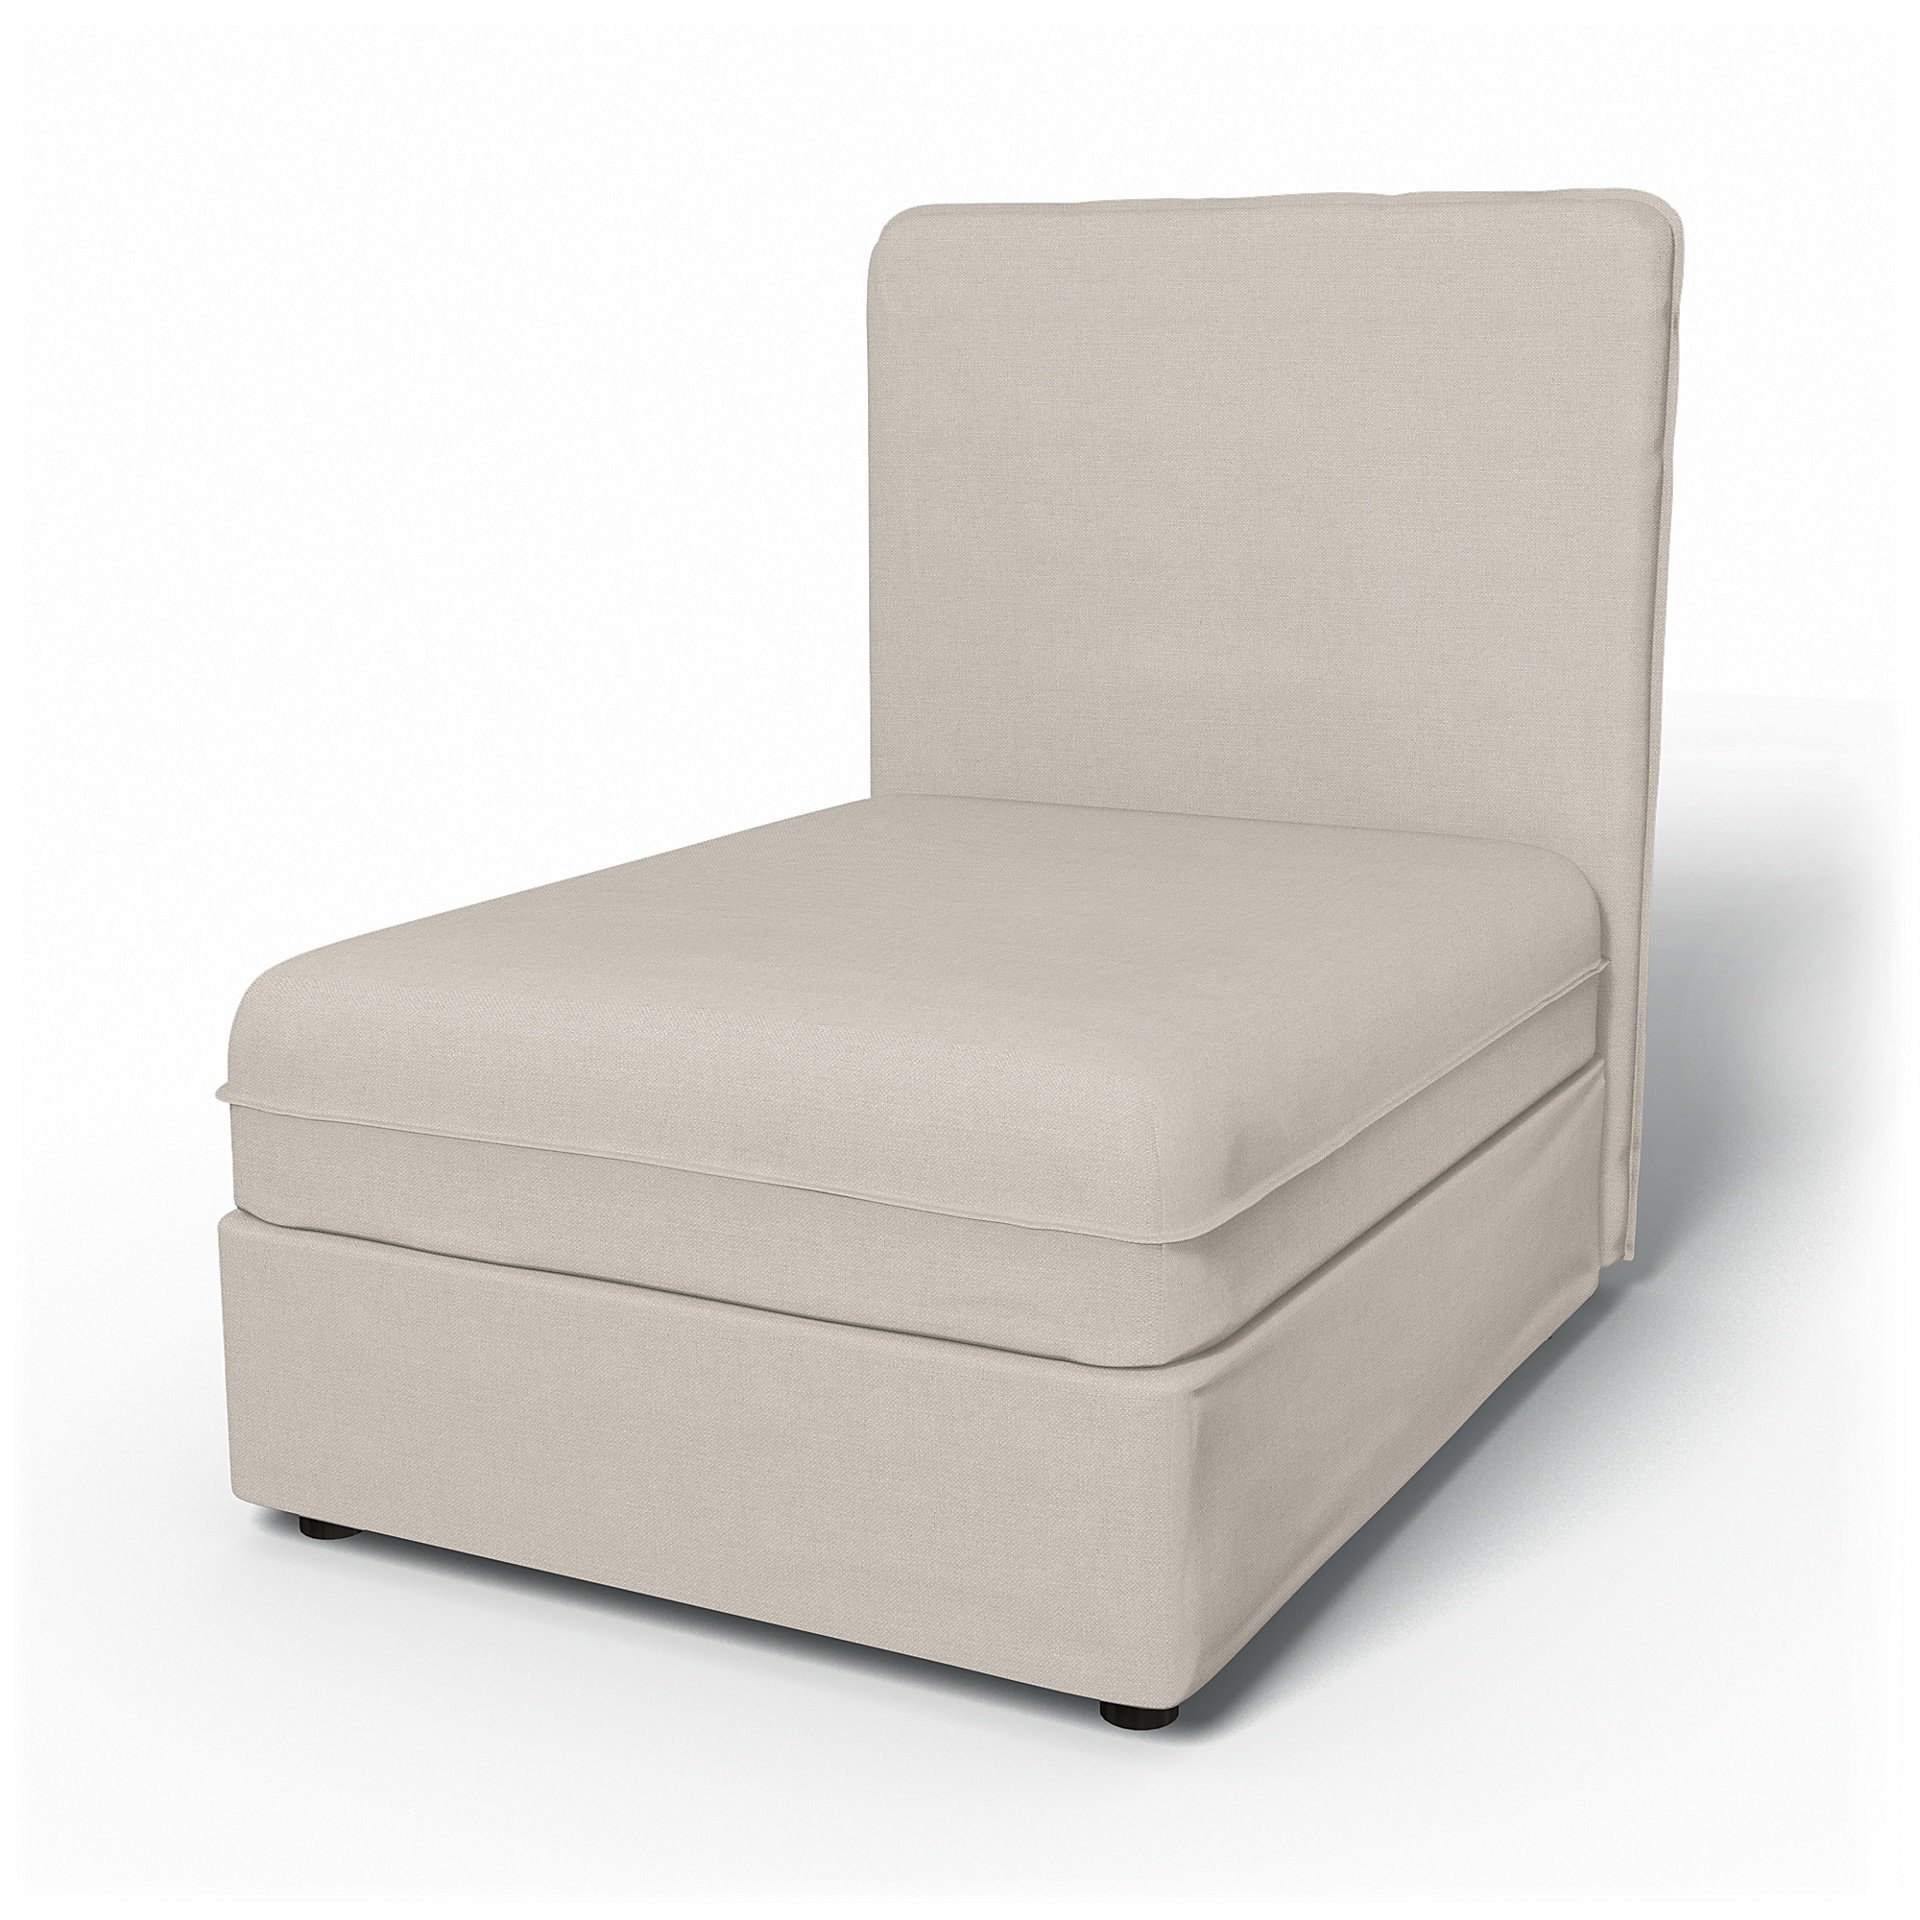 IKEA - Vallentuna Seat Module with High Back Cover 80x100cm 32x32in, Chalk, Linen - Bemz